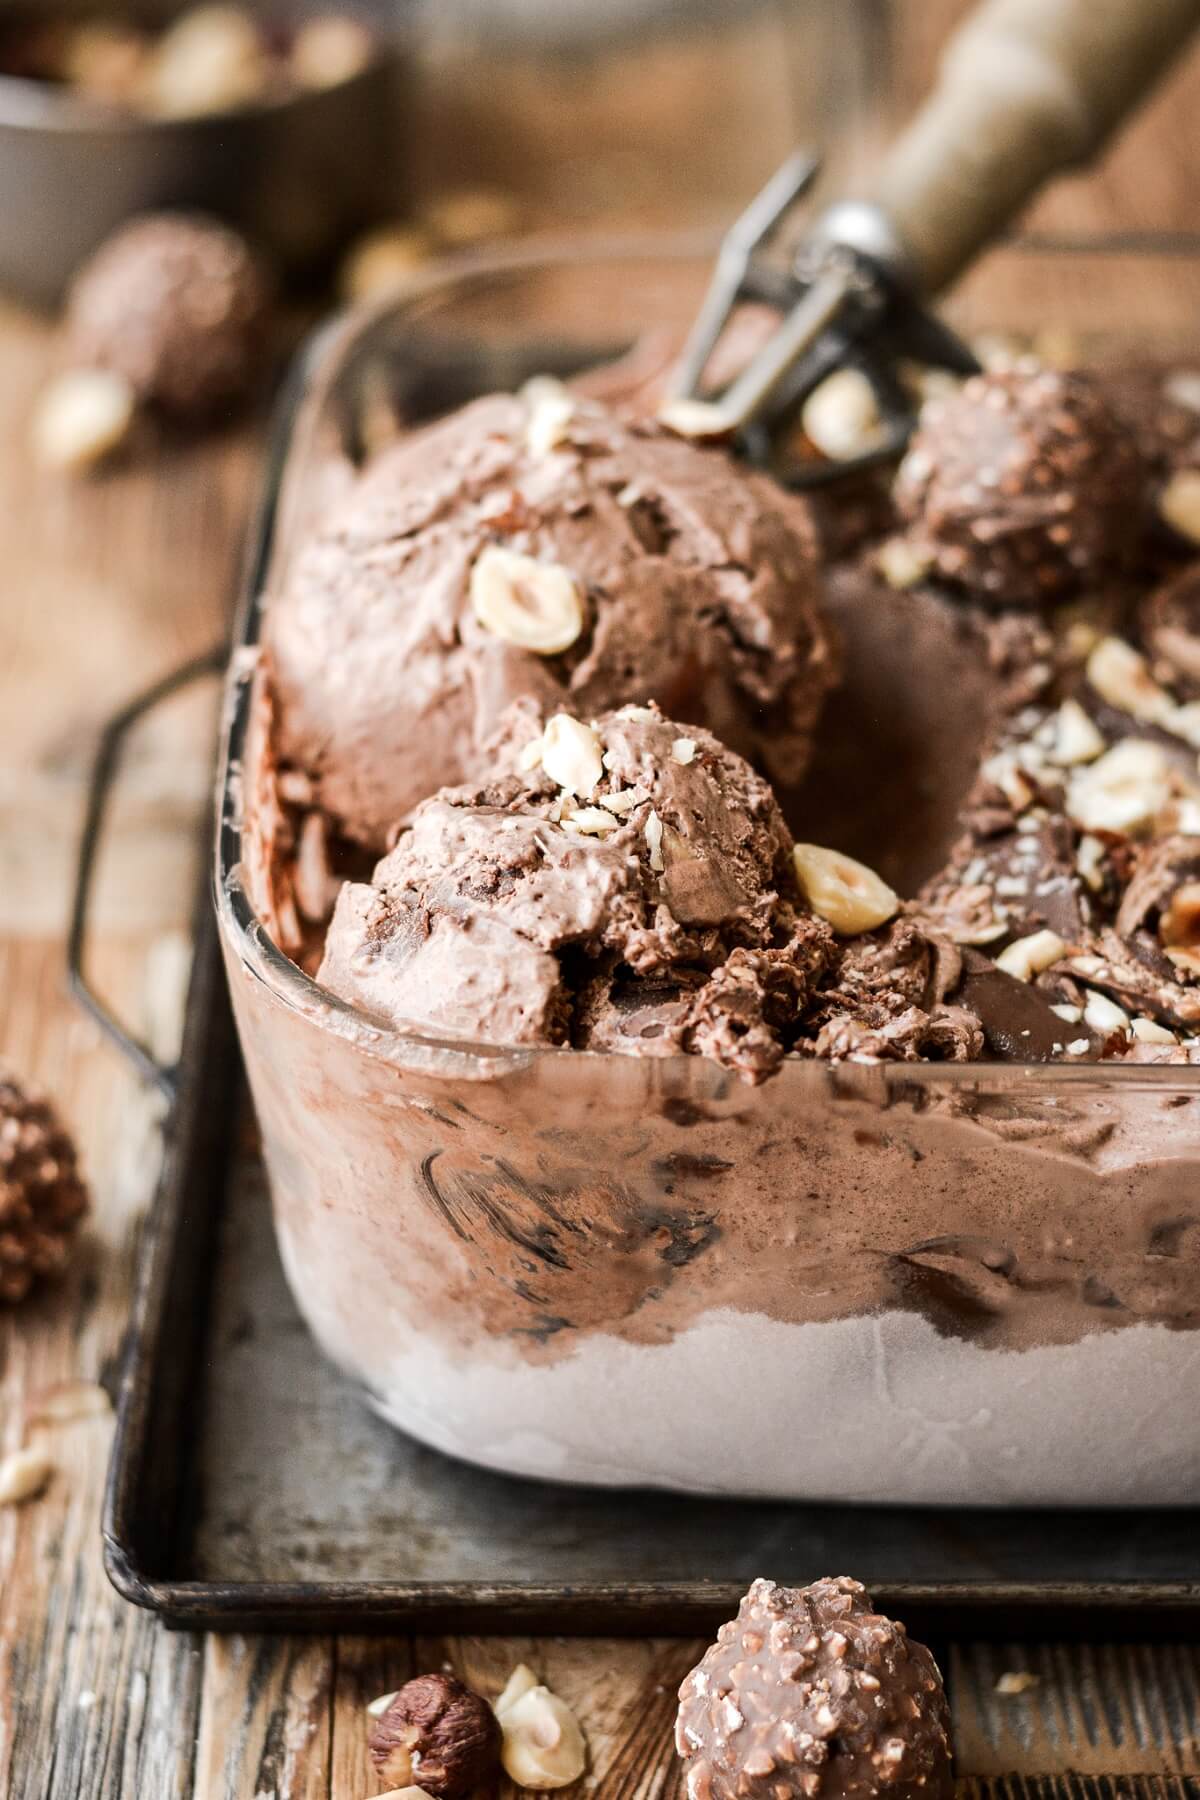 Chocolate hazelnut ice cream in a glass dish.